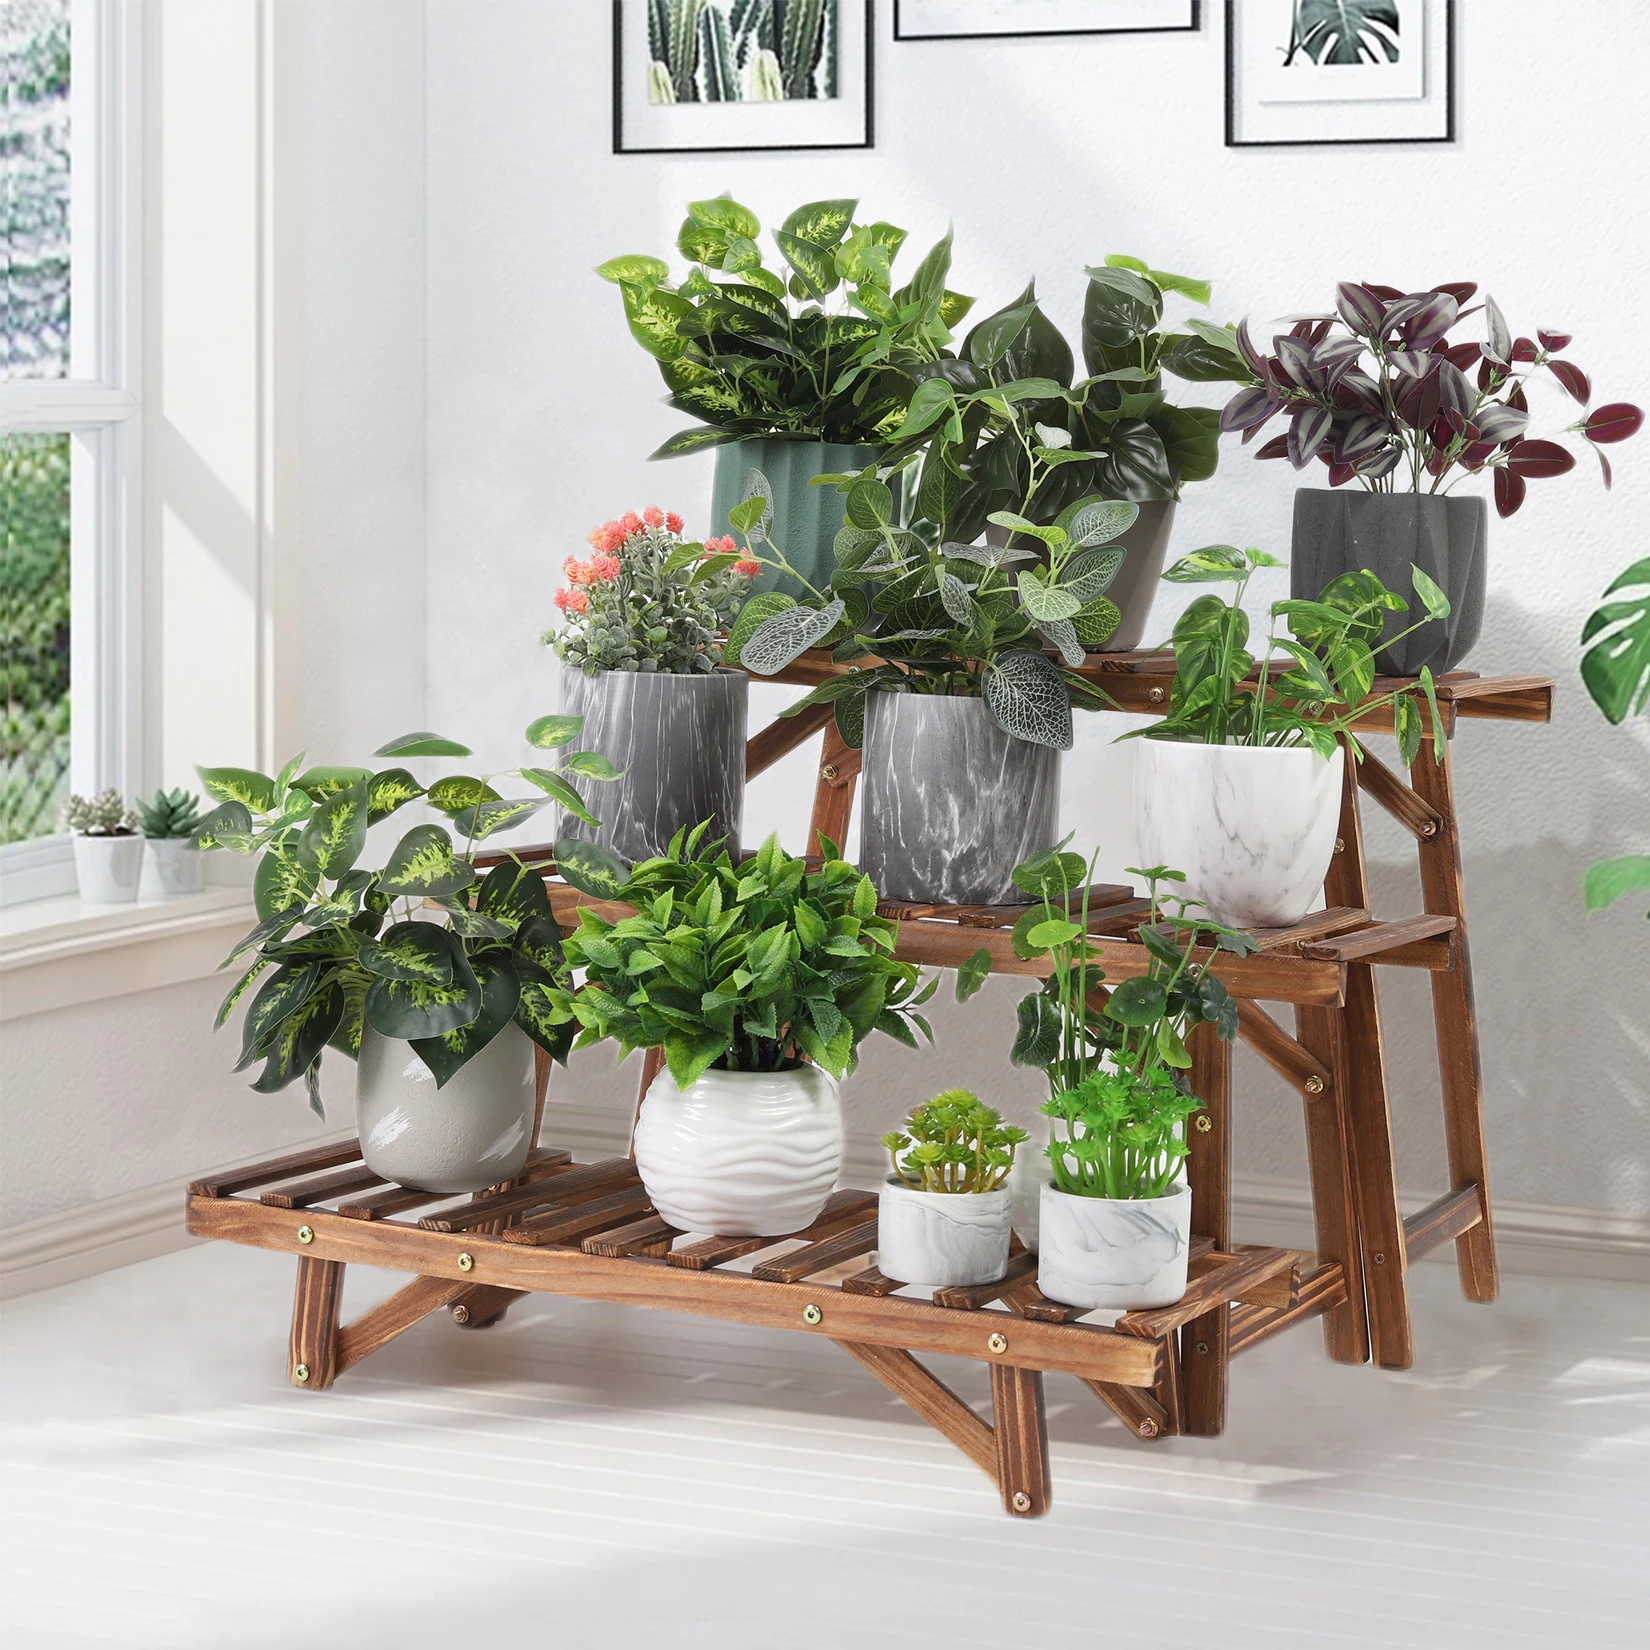 3 Tier Freestanding Ladder Shelf Wood Plant Stand Indoor Outdoor Plant Display Rack Flower Pot Holder Planter Organizer